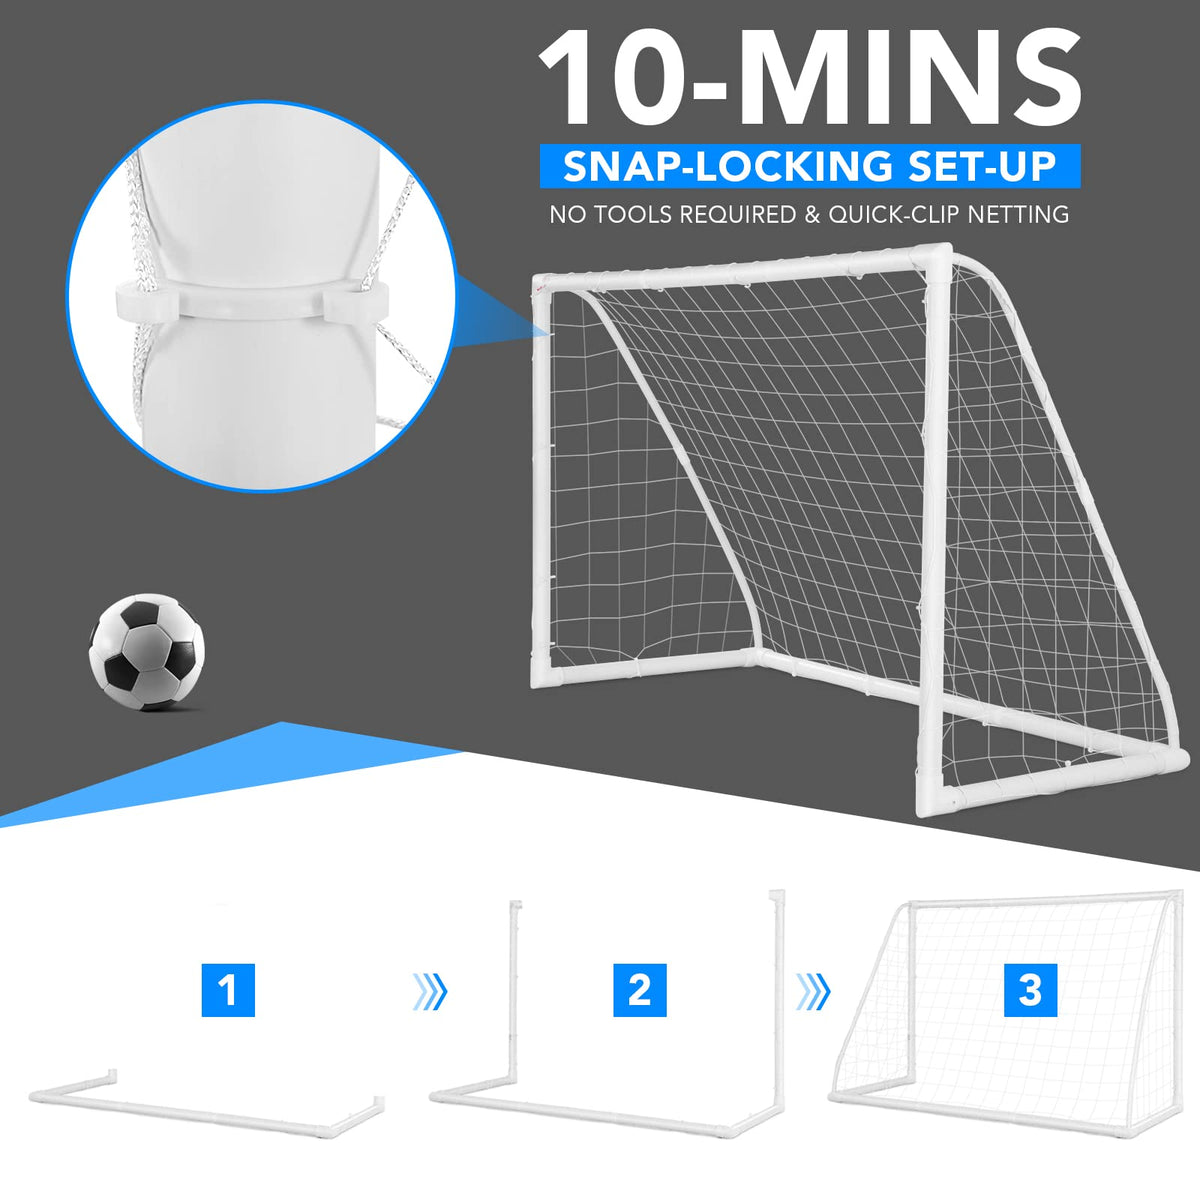 Kids Portable Soccer Goal, 1.8m x 1.2m FT Backyard Soccer Goal and Net with Strong PVC Frame